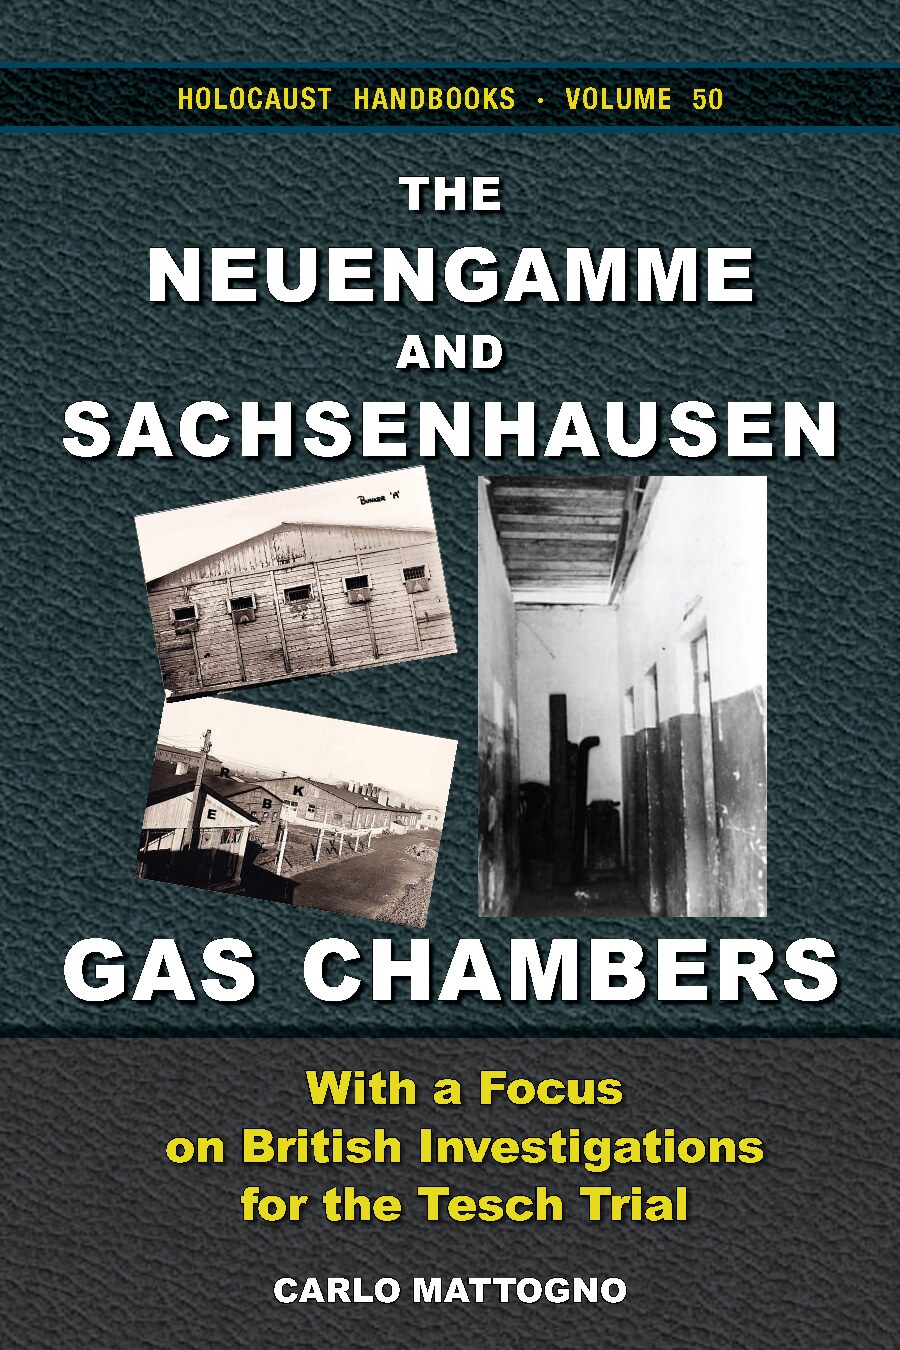 The Neuengamme and Sachsenhausen Gas Chambers